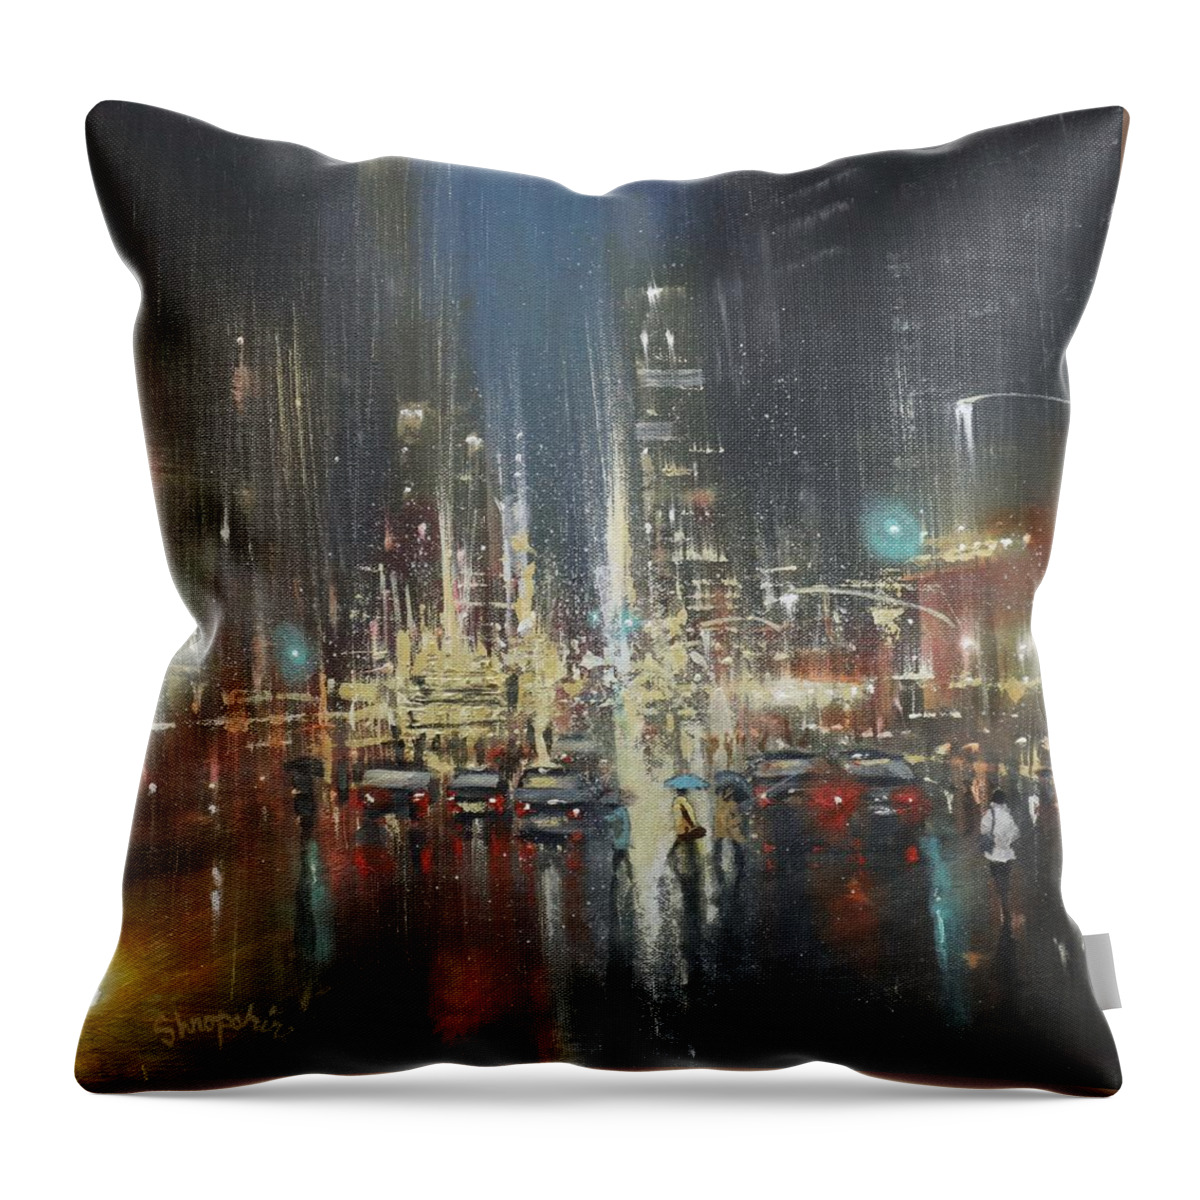 City Rain Throw Pillow featuring the painting Night Rain by Tom Shropshire